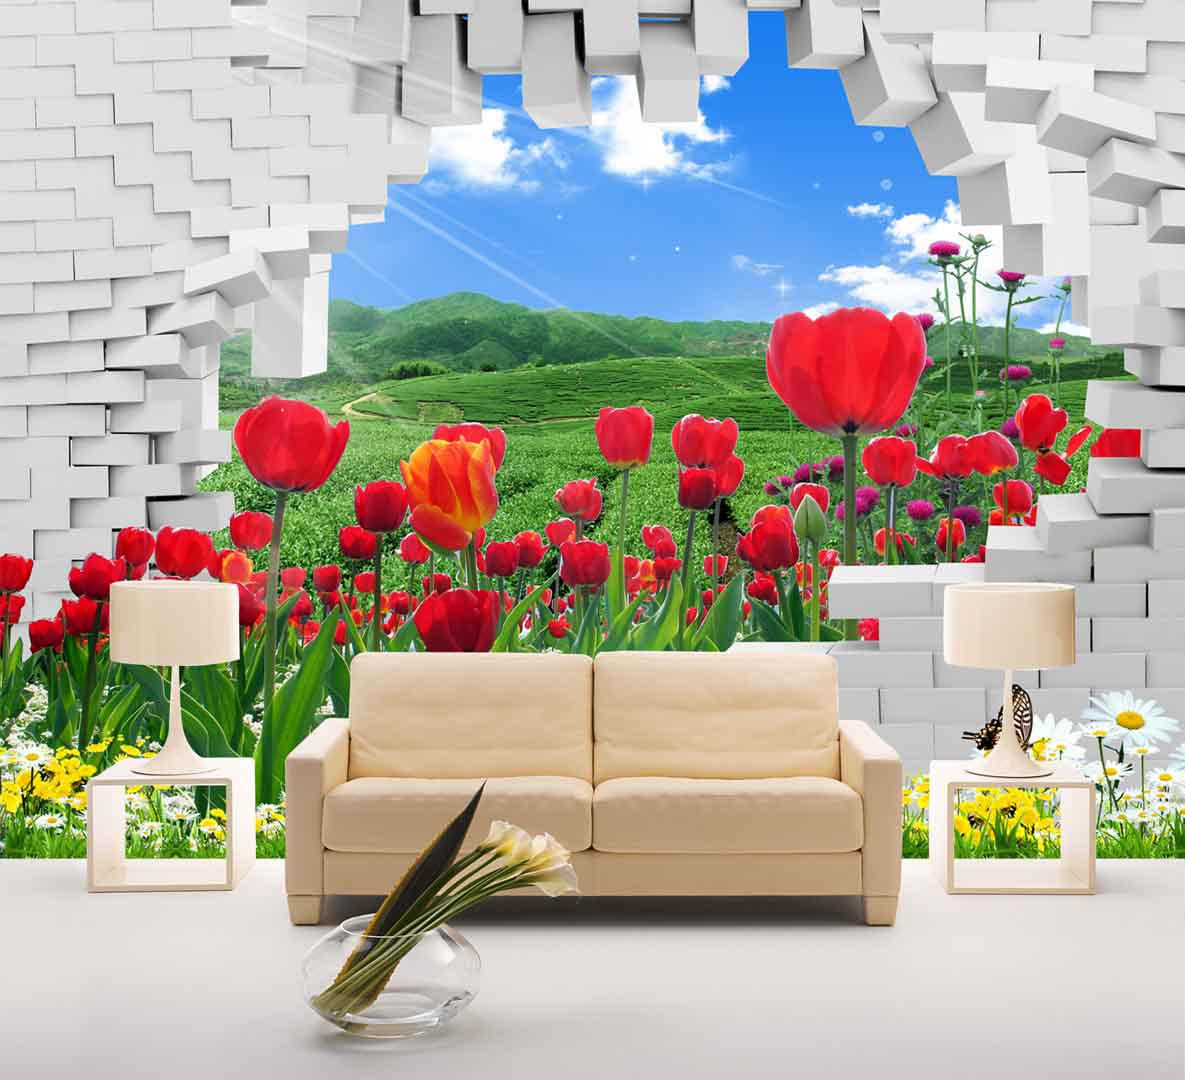 VIPcorel.com_tranh tuong gach 3d va vuon hoa tulip.jpg